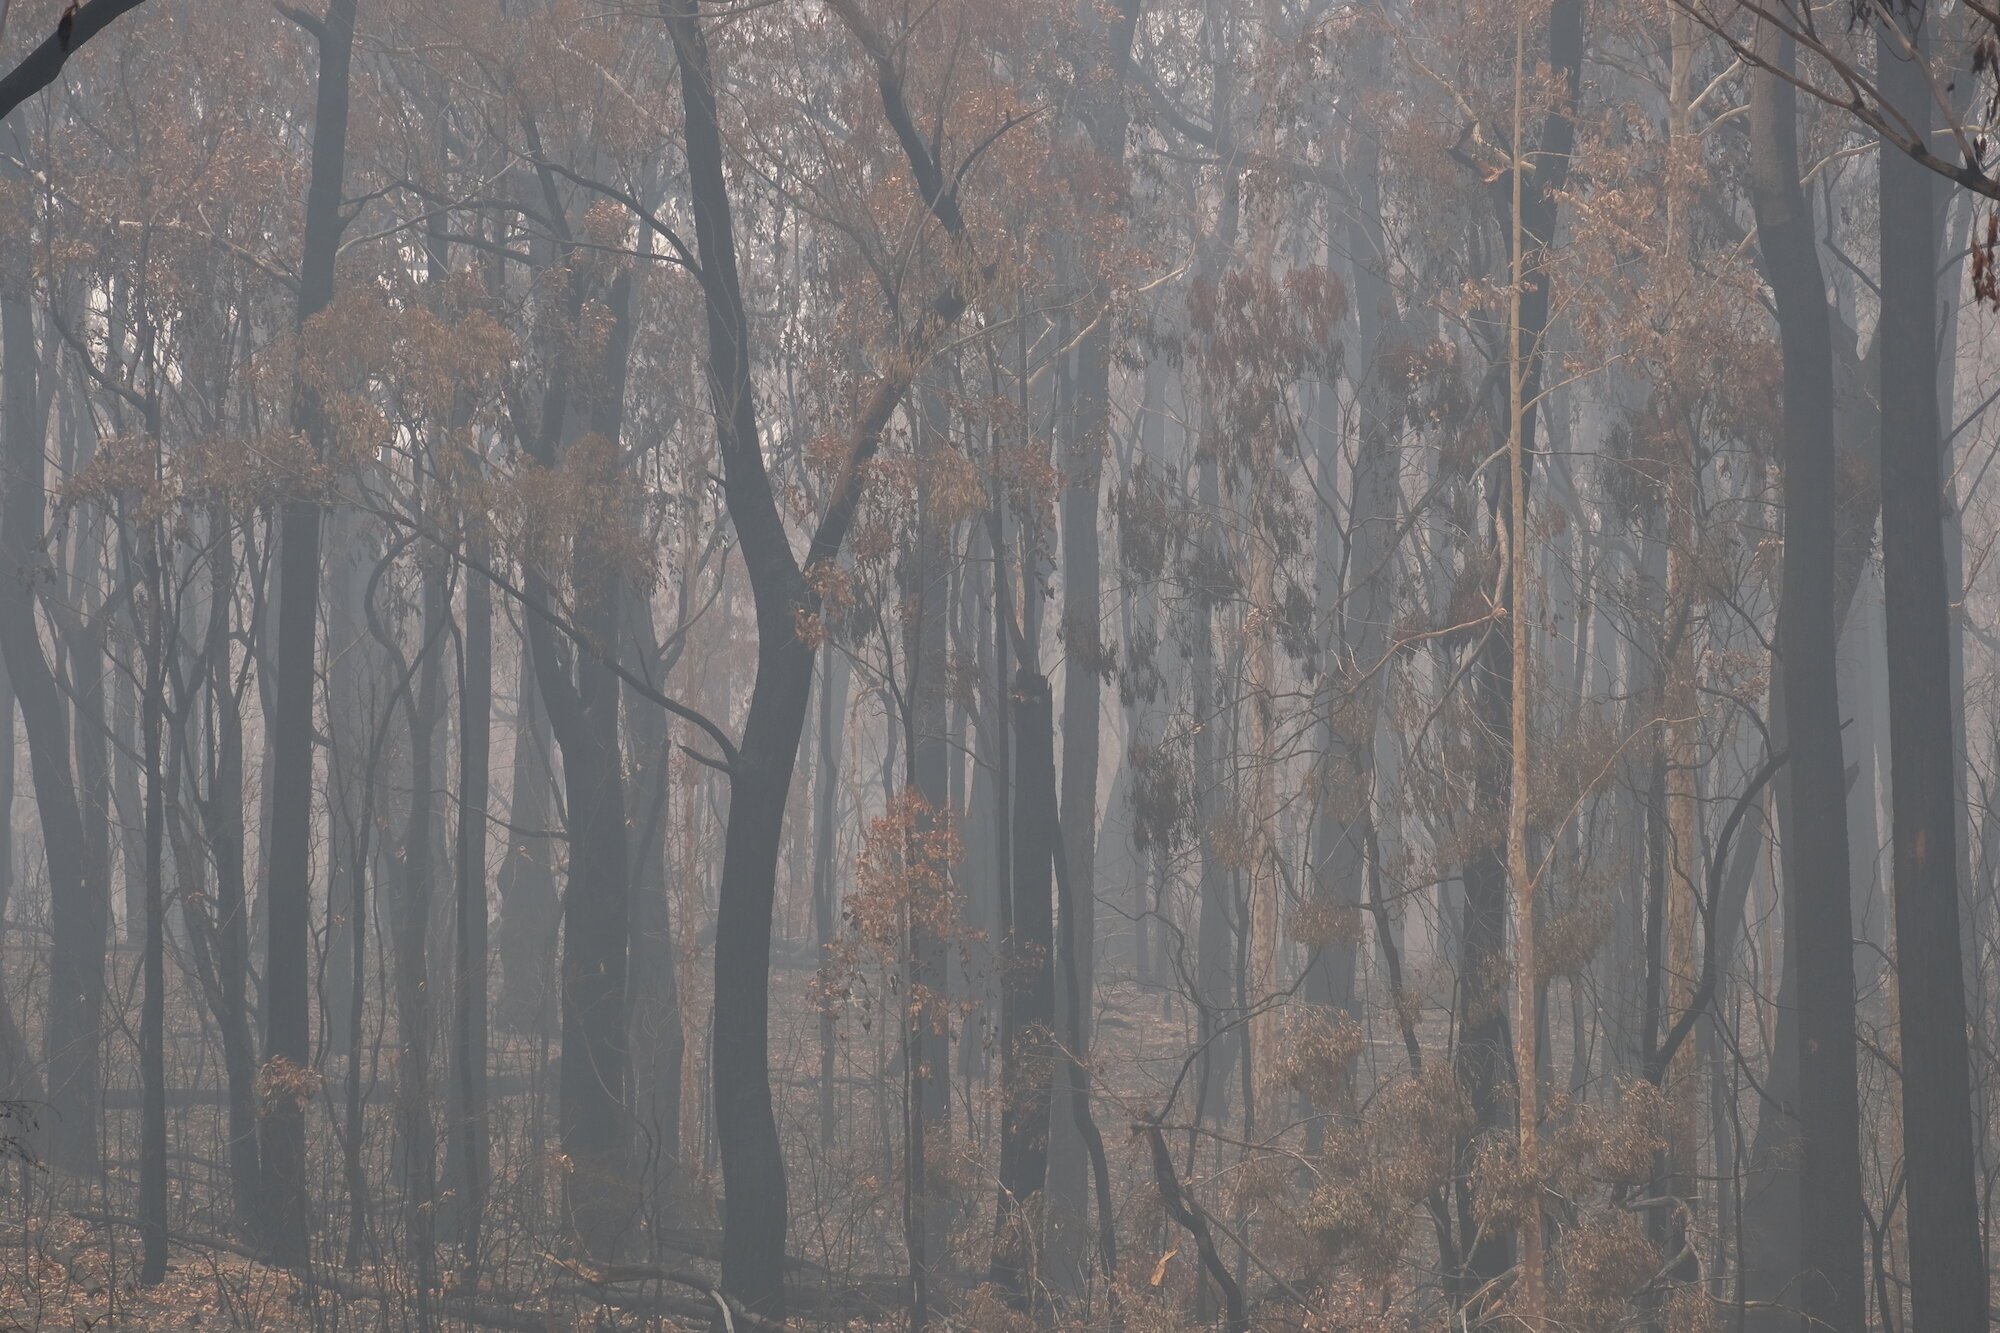 Bush fire, New South Wales